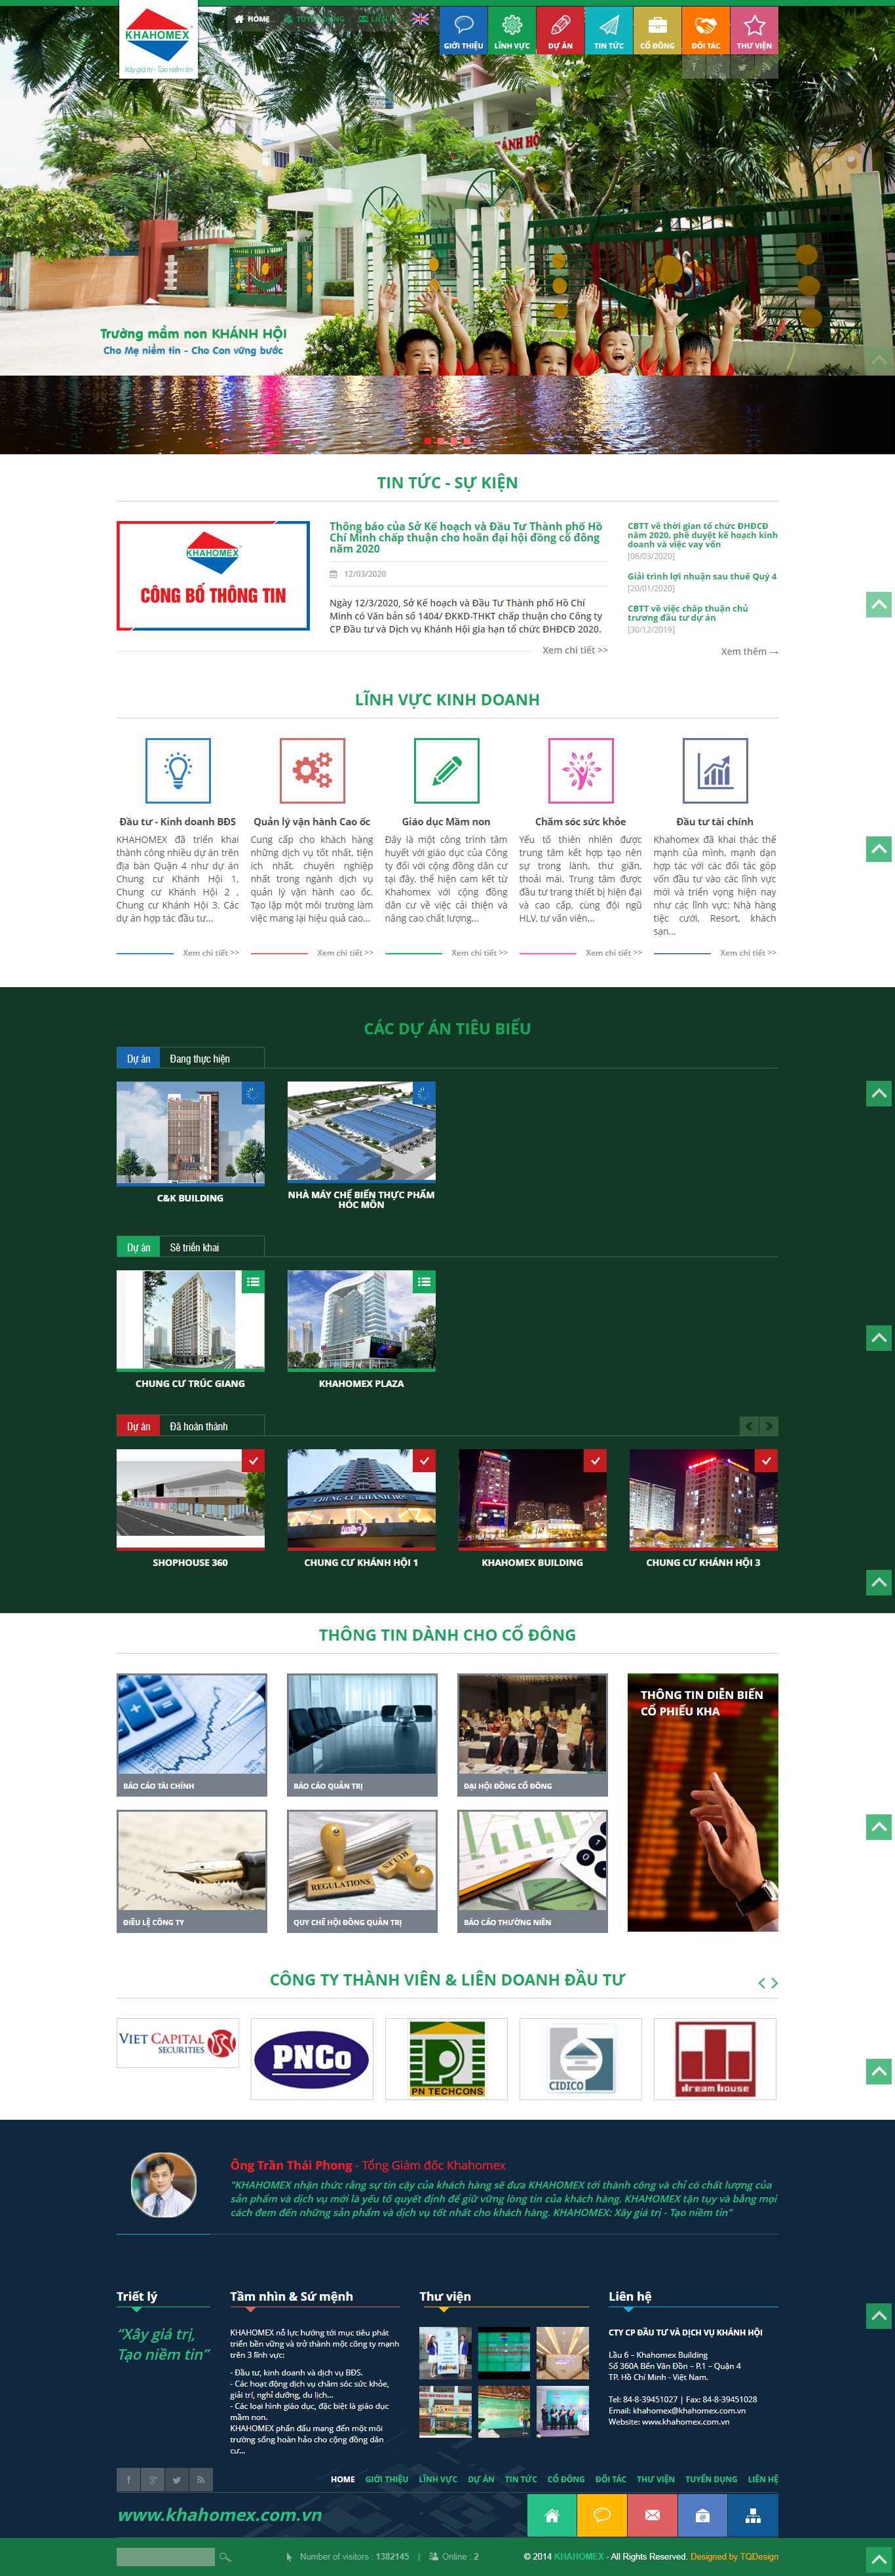 Thiết kế Website đầu tư - www.khahomex.com.vn